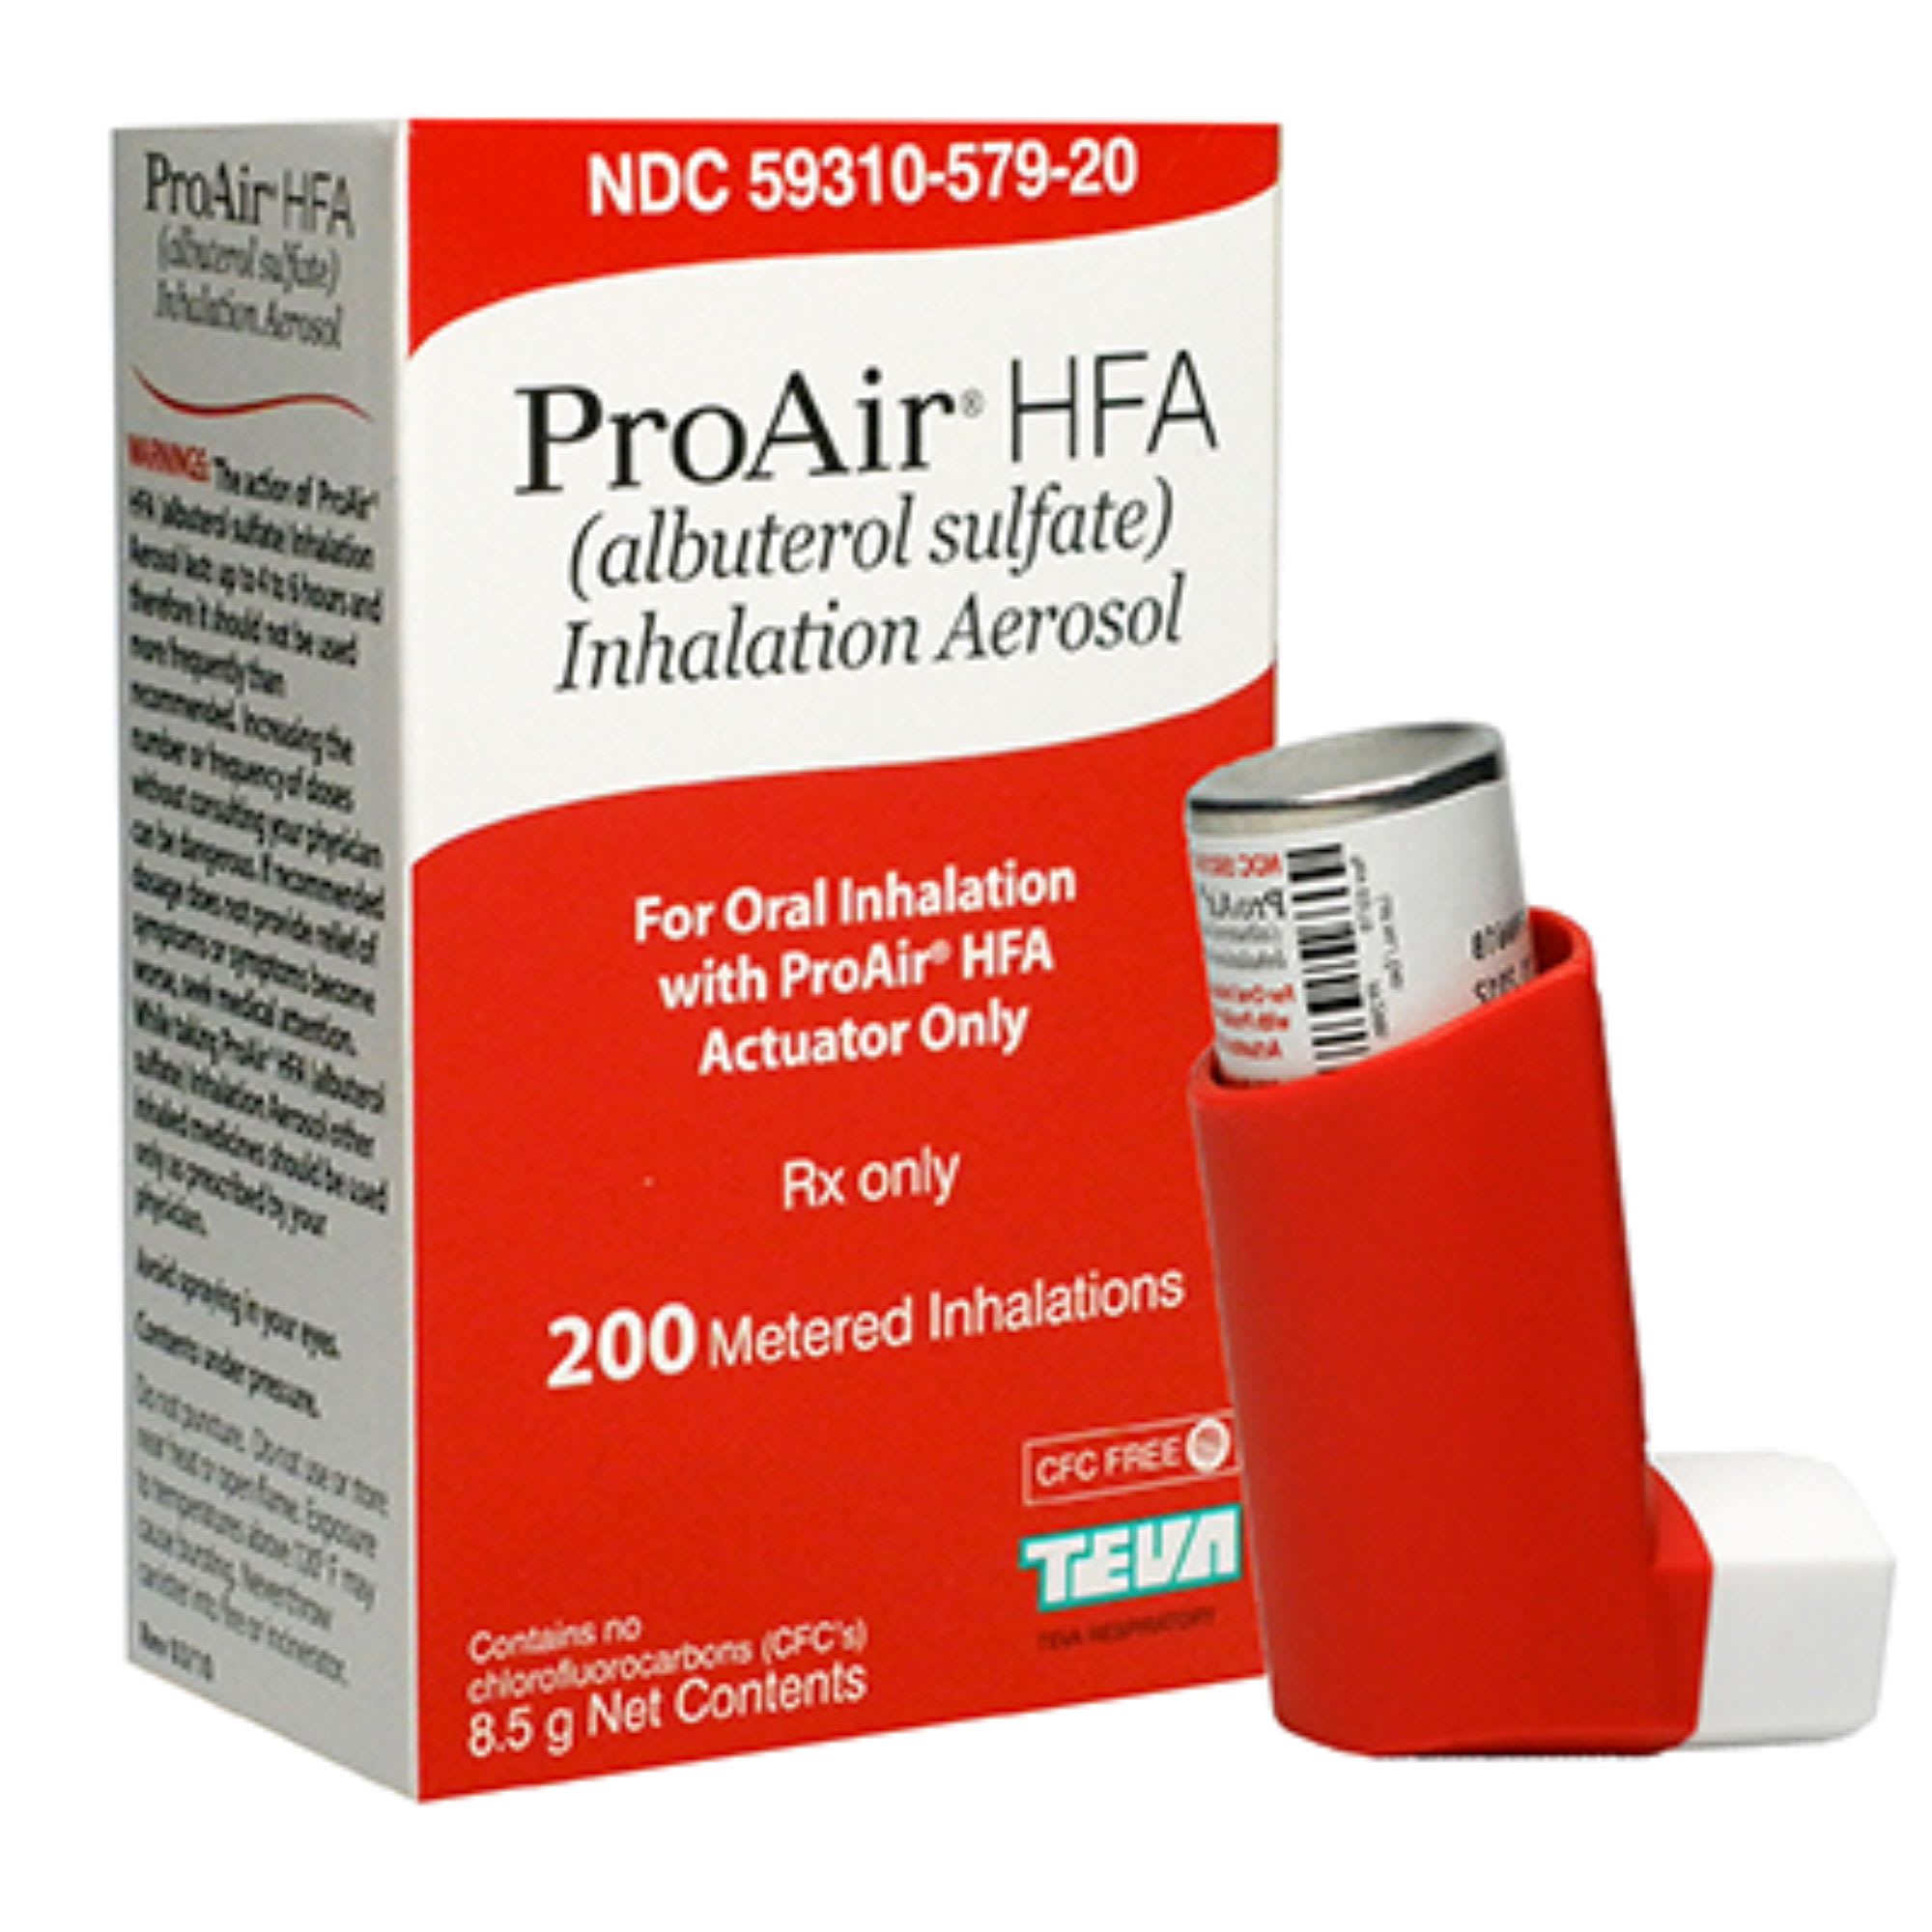 ProAir HFA Inhalation Aerosol, 90MCG, 8.5GM Petco